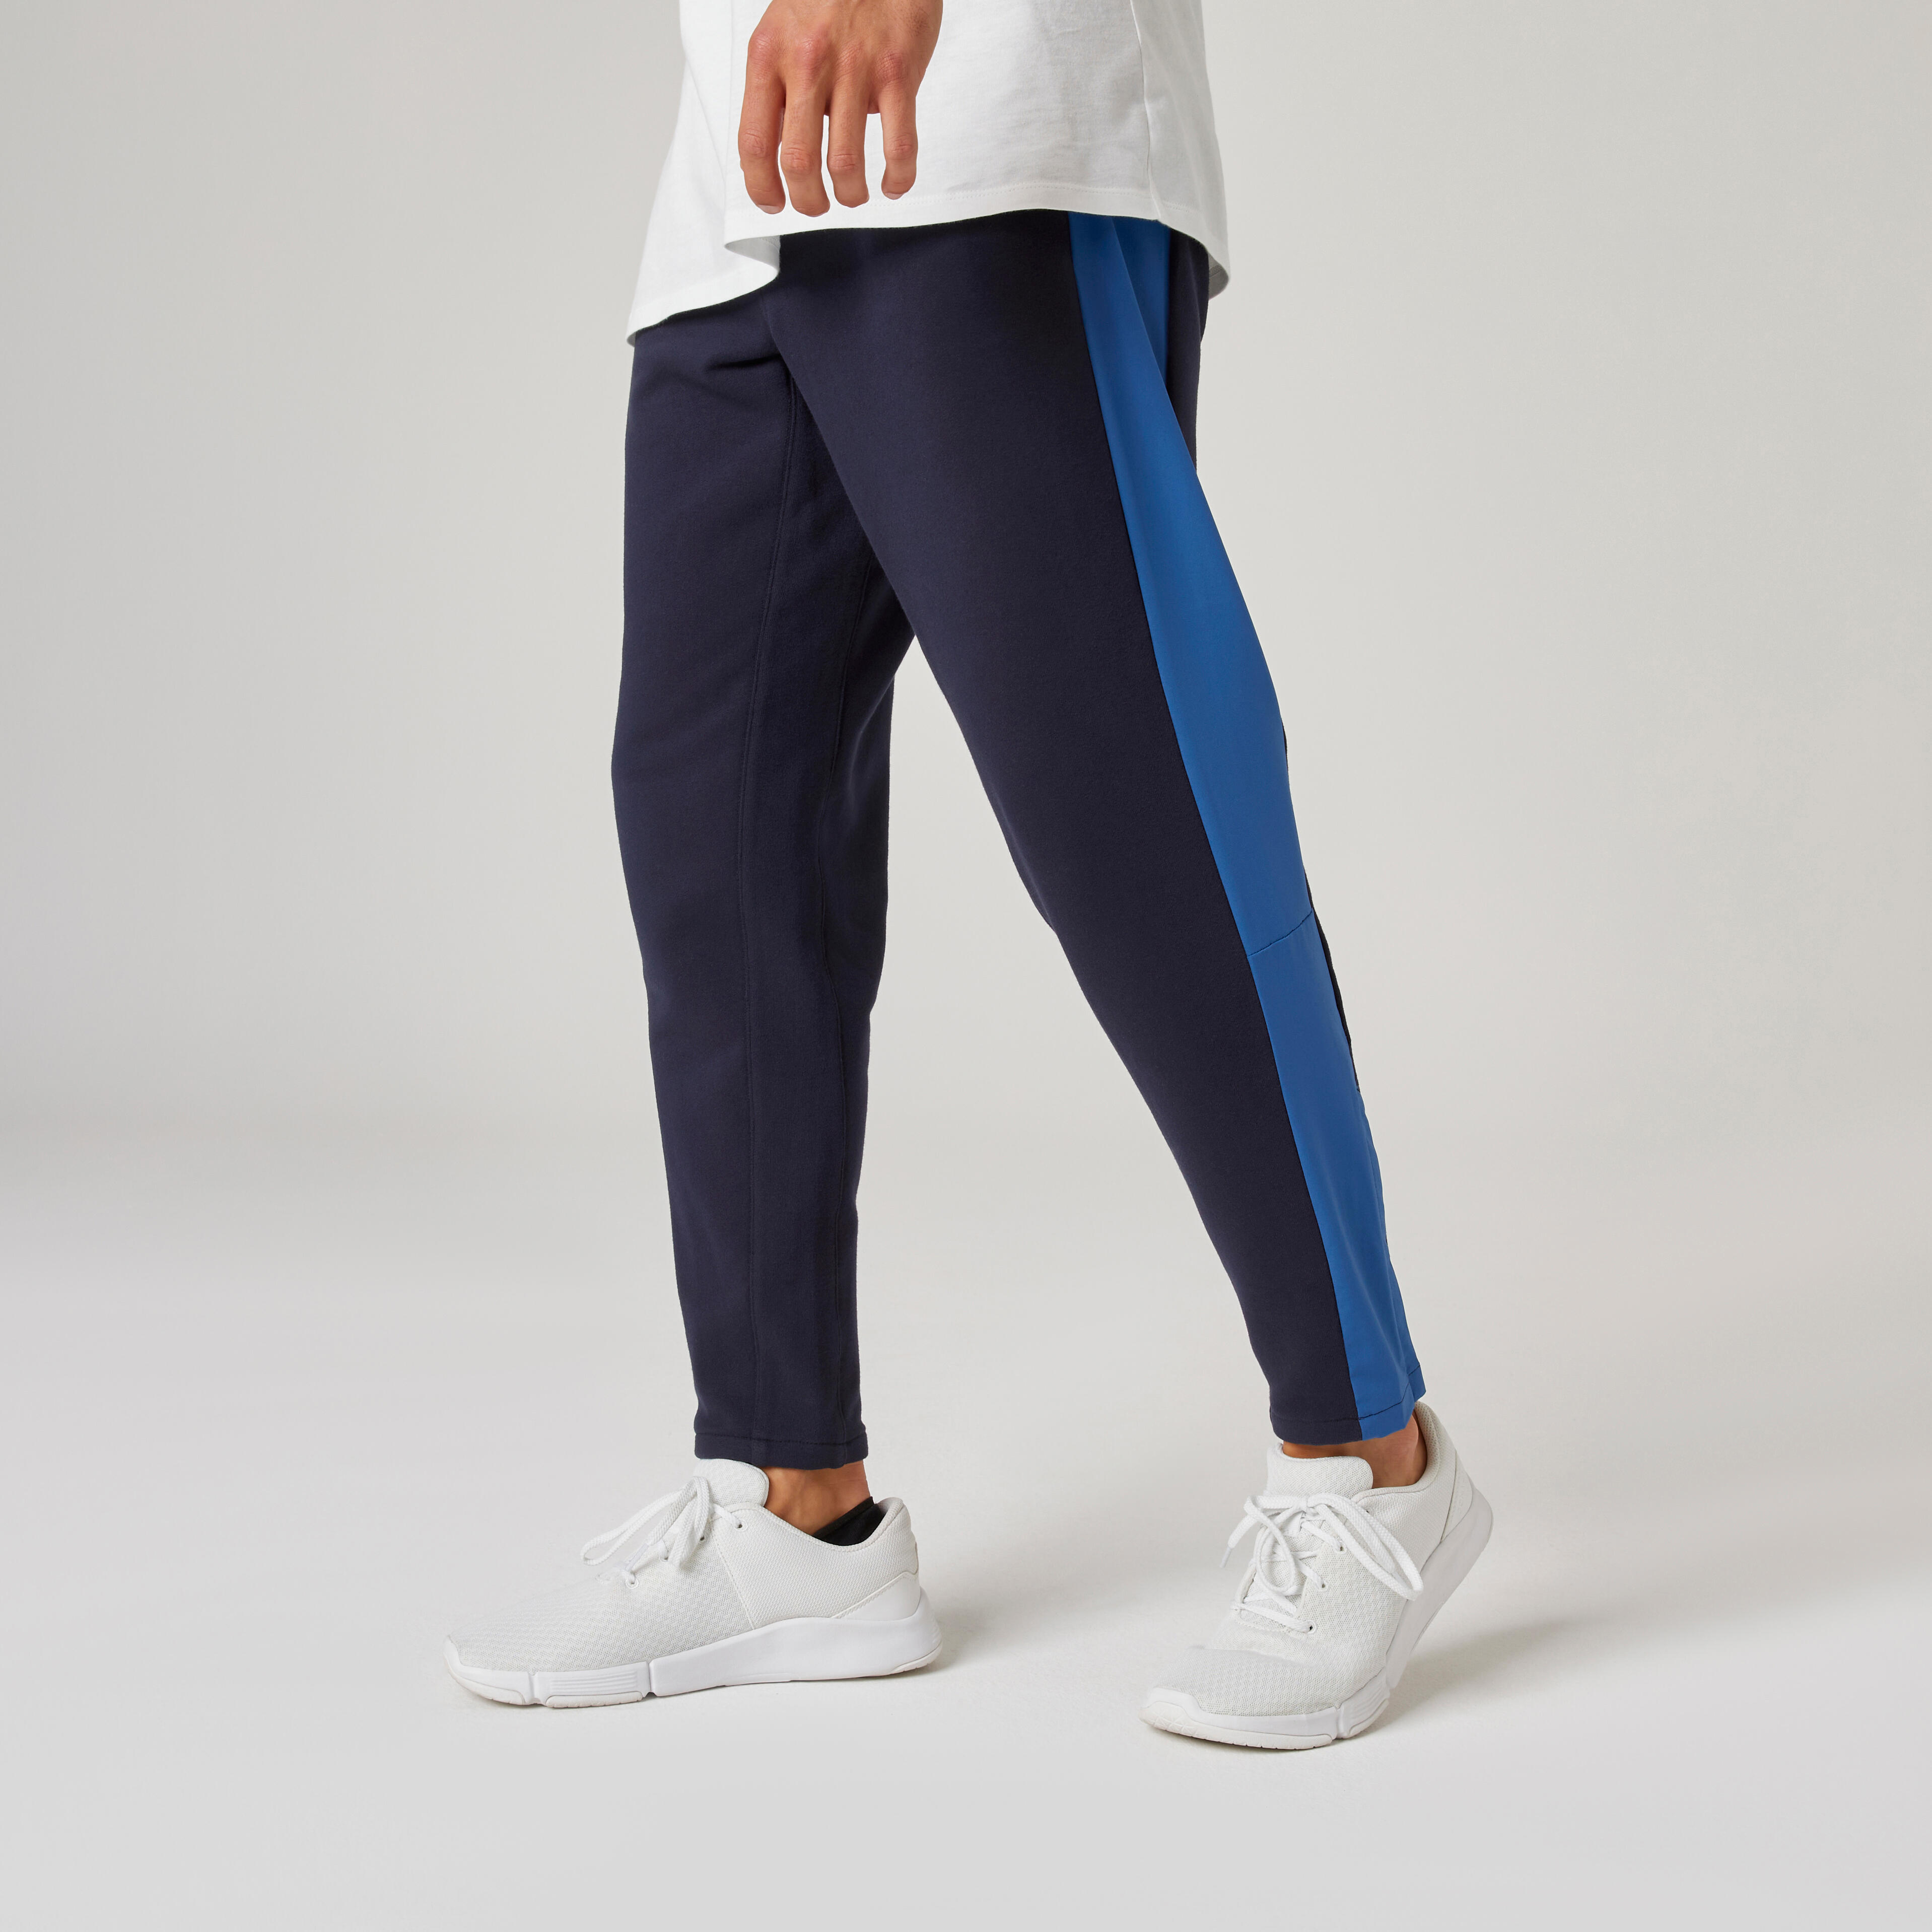 Nike Band Track Pants for Men | Mercari